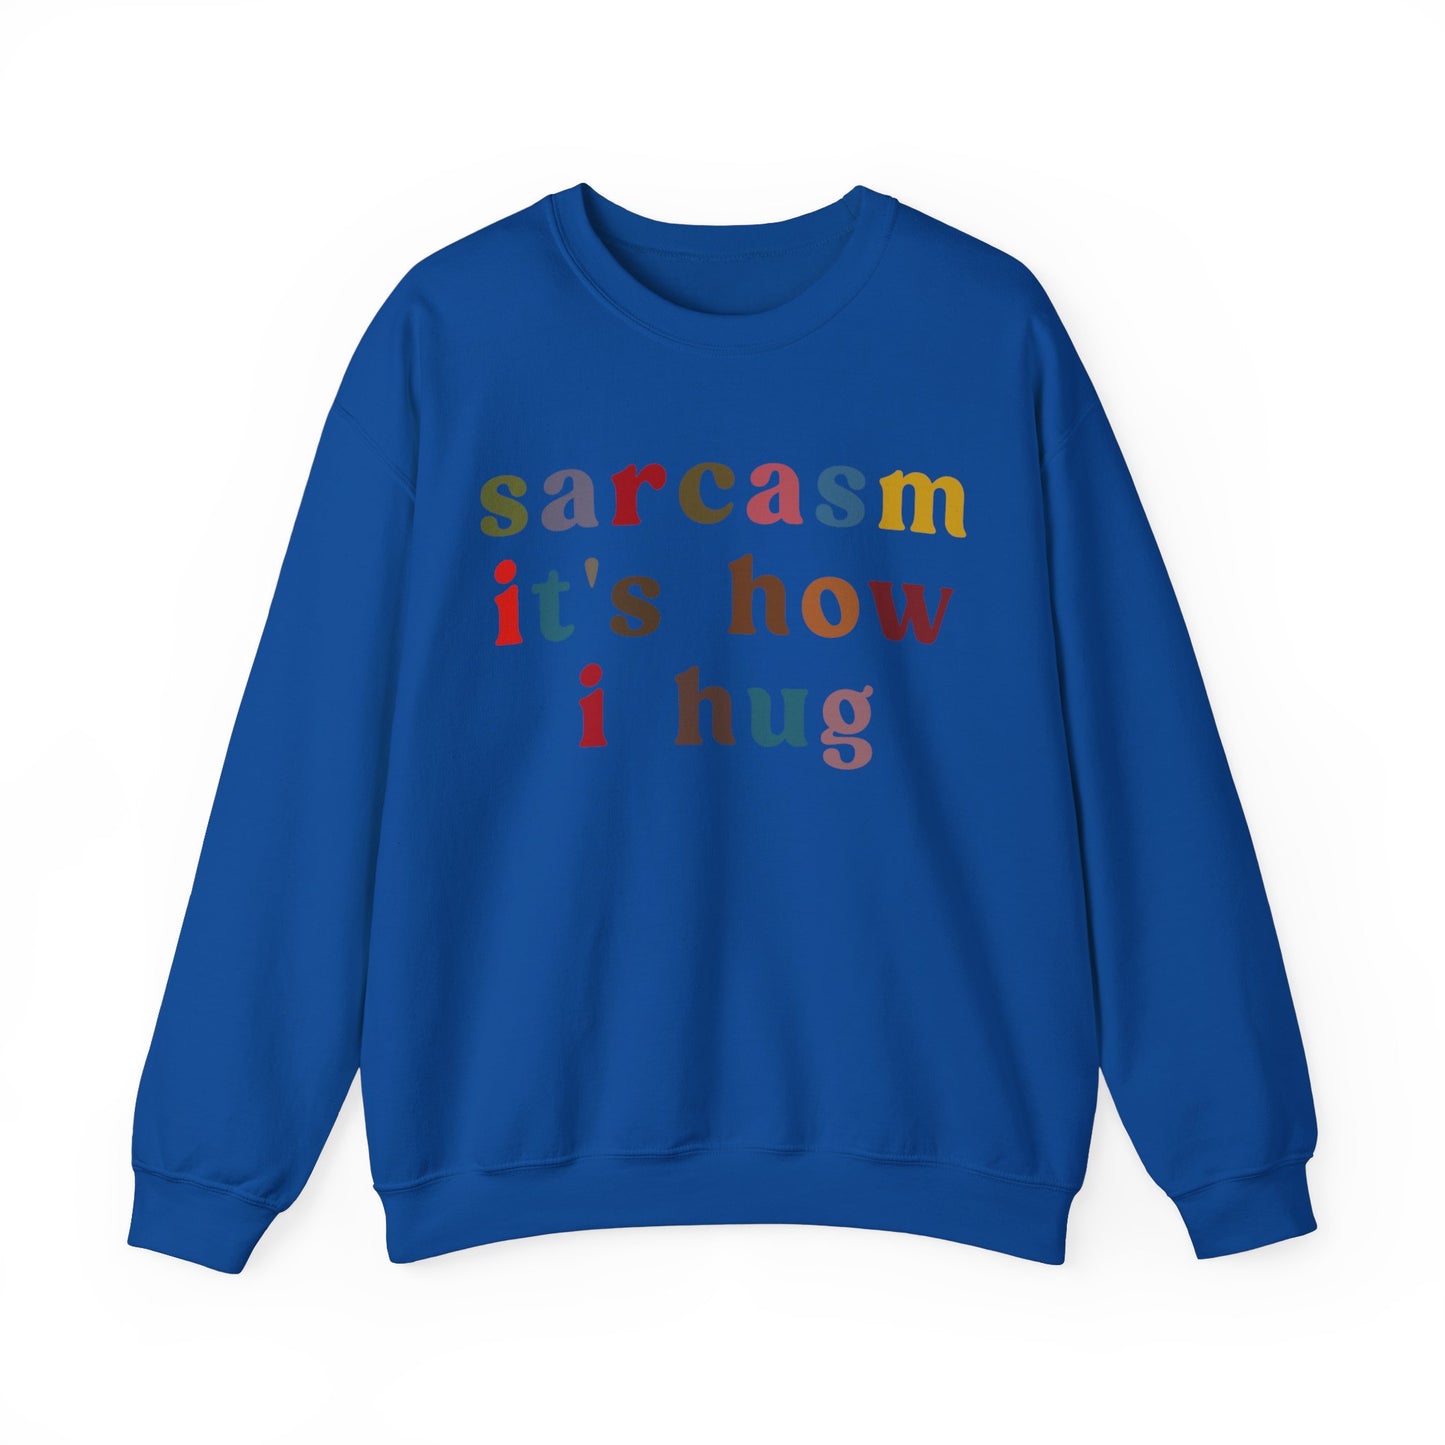 Sarcasm It's How I Hug Sweatshirt, Sarcastic Quote Sweatshirt, Sarcasm Women Sweatshirt, Funny Mom Sweatshirt, Shirt for Women, S1260